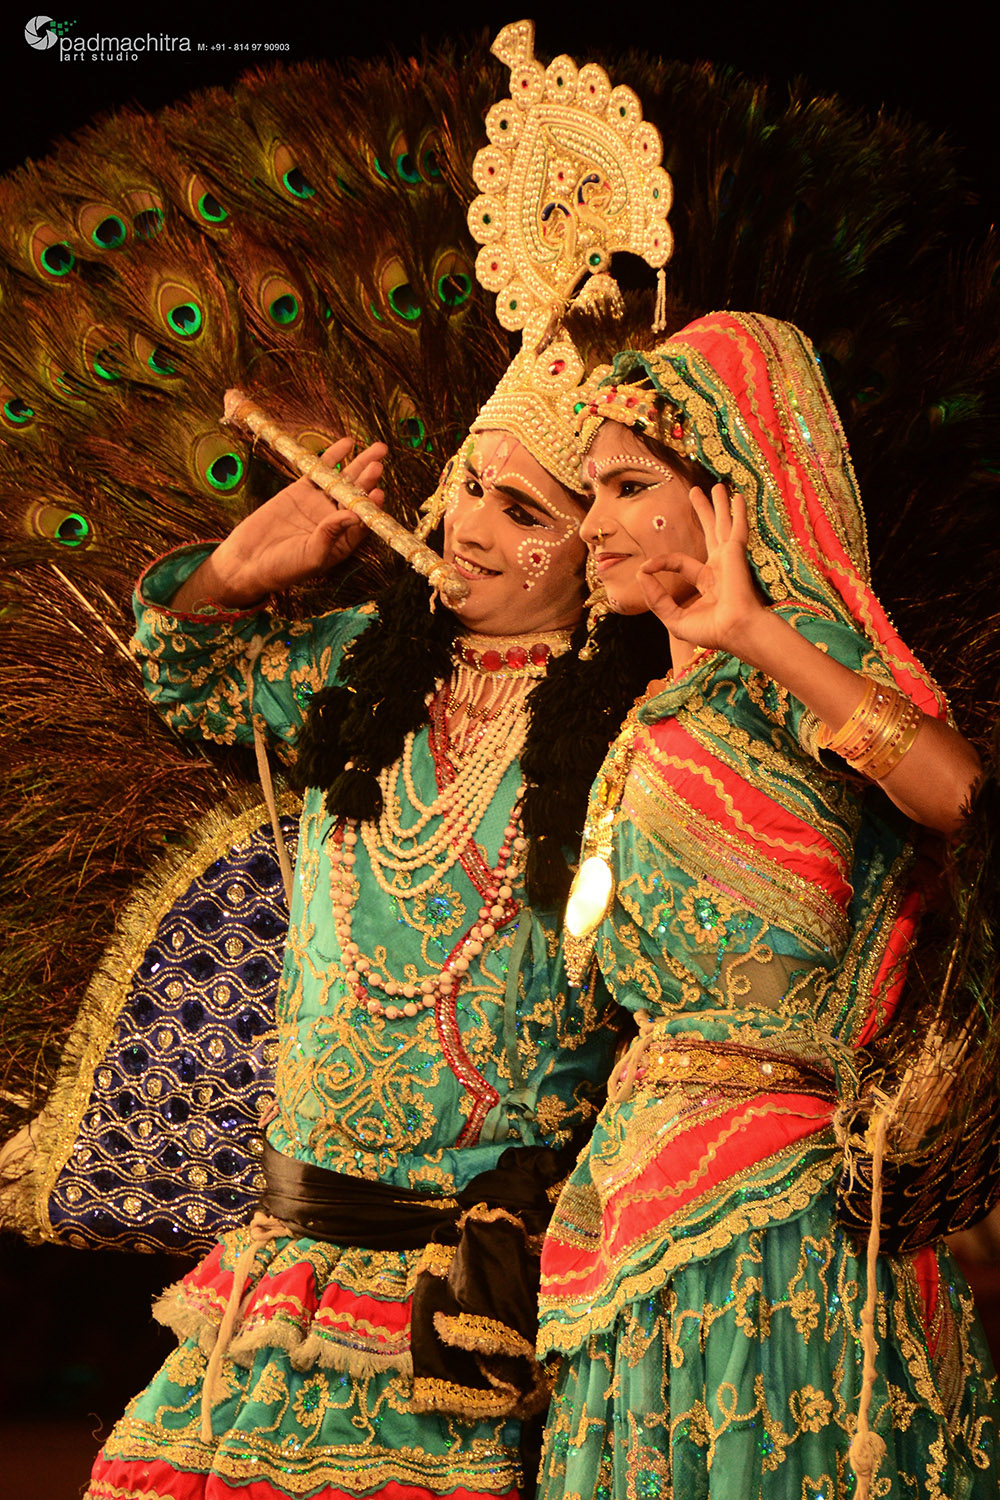 indian folk Indian tradition culture India primitive indian culture folk dances